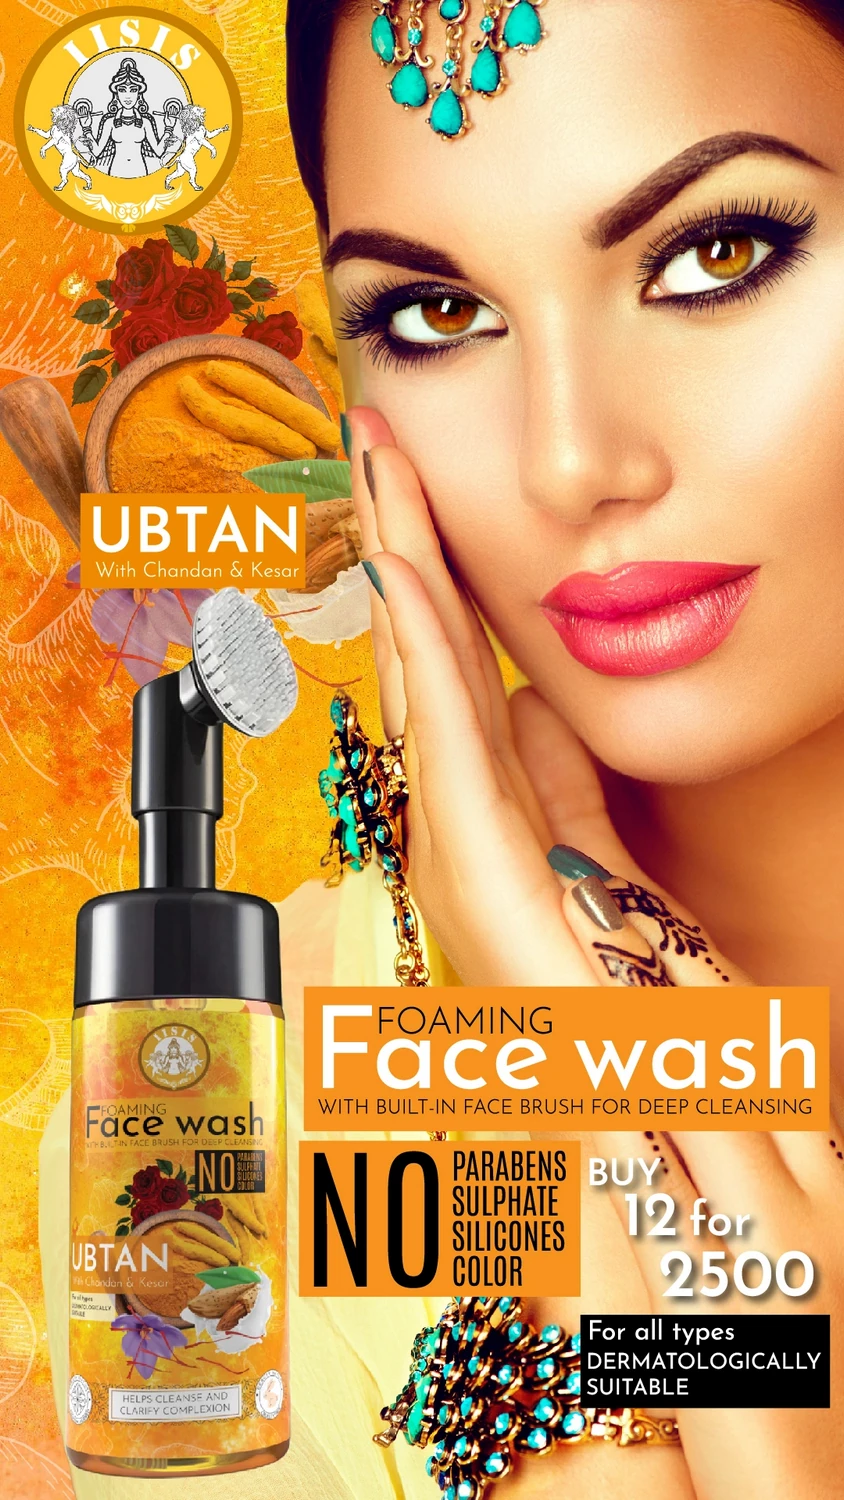 RBV B2B Ubtan With Chandan & Kesar Foaming Face Wash With Built-In Face Brush (150ml)- 12 Pcs.